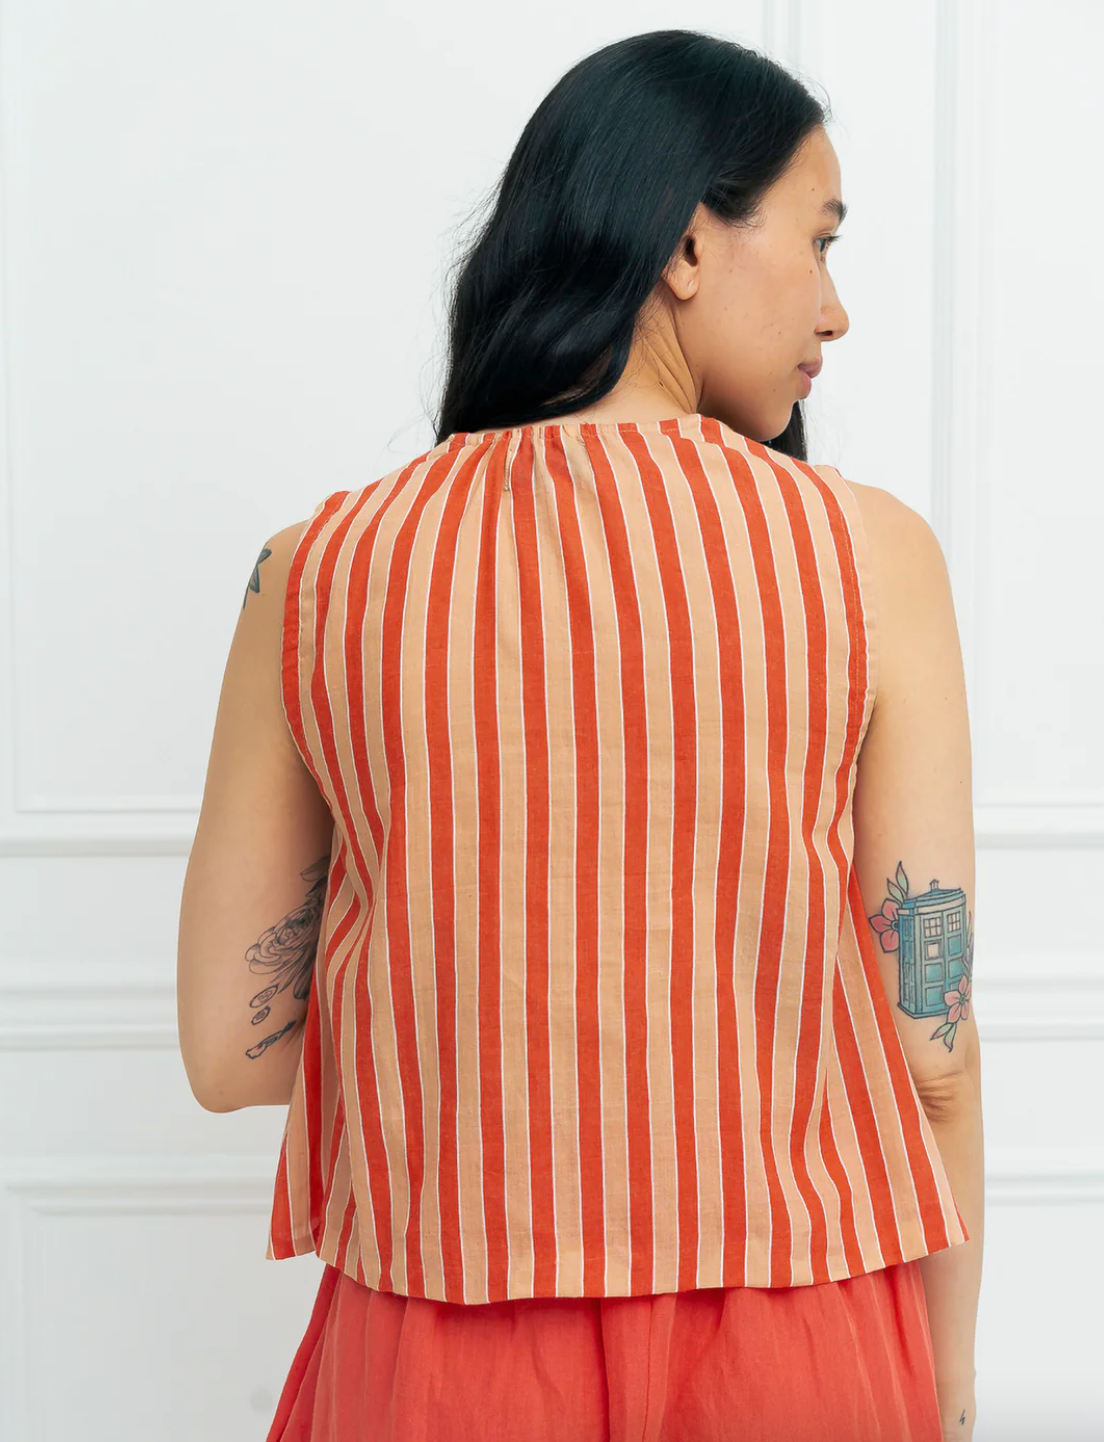 Product Image for Chloe Shirt, Tangerine Stripe